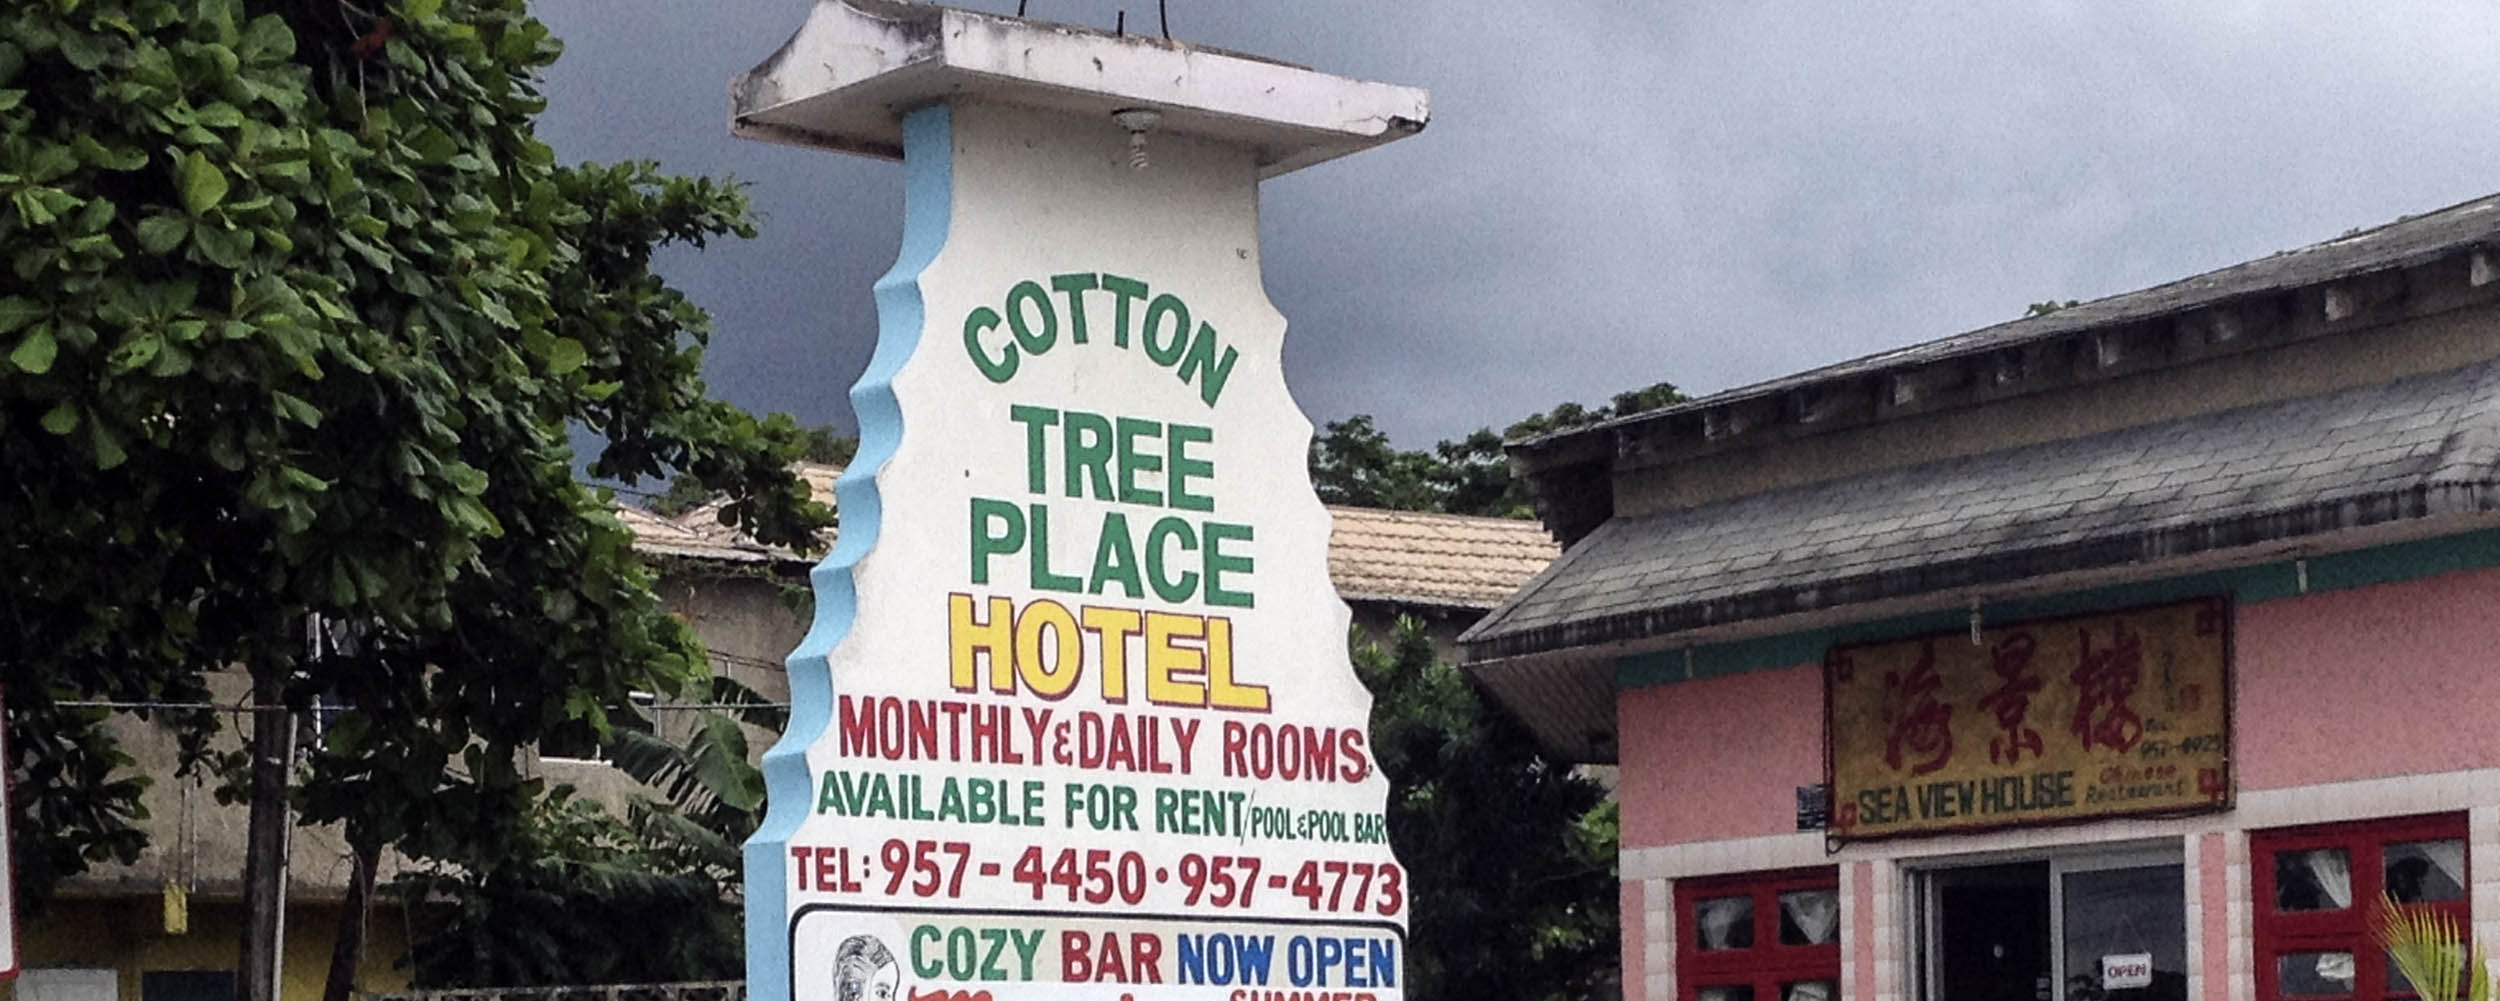 Cotton Tree Place Hotel - Negril Jamaica